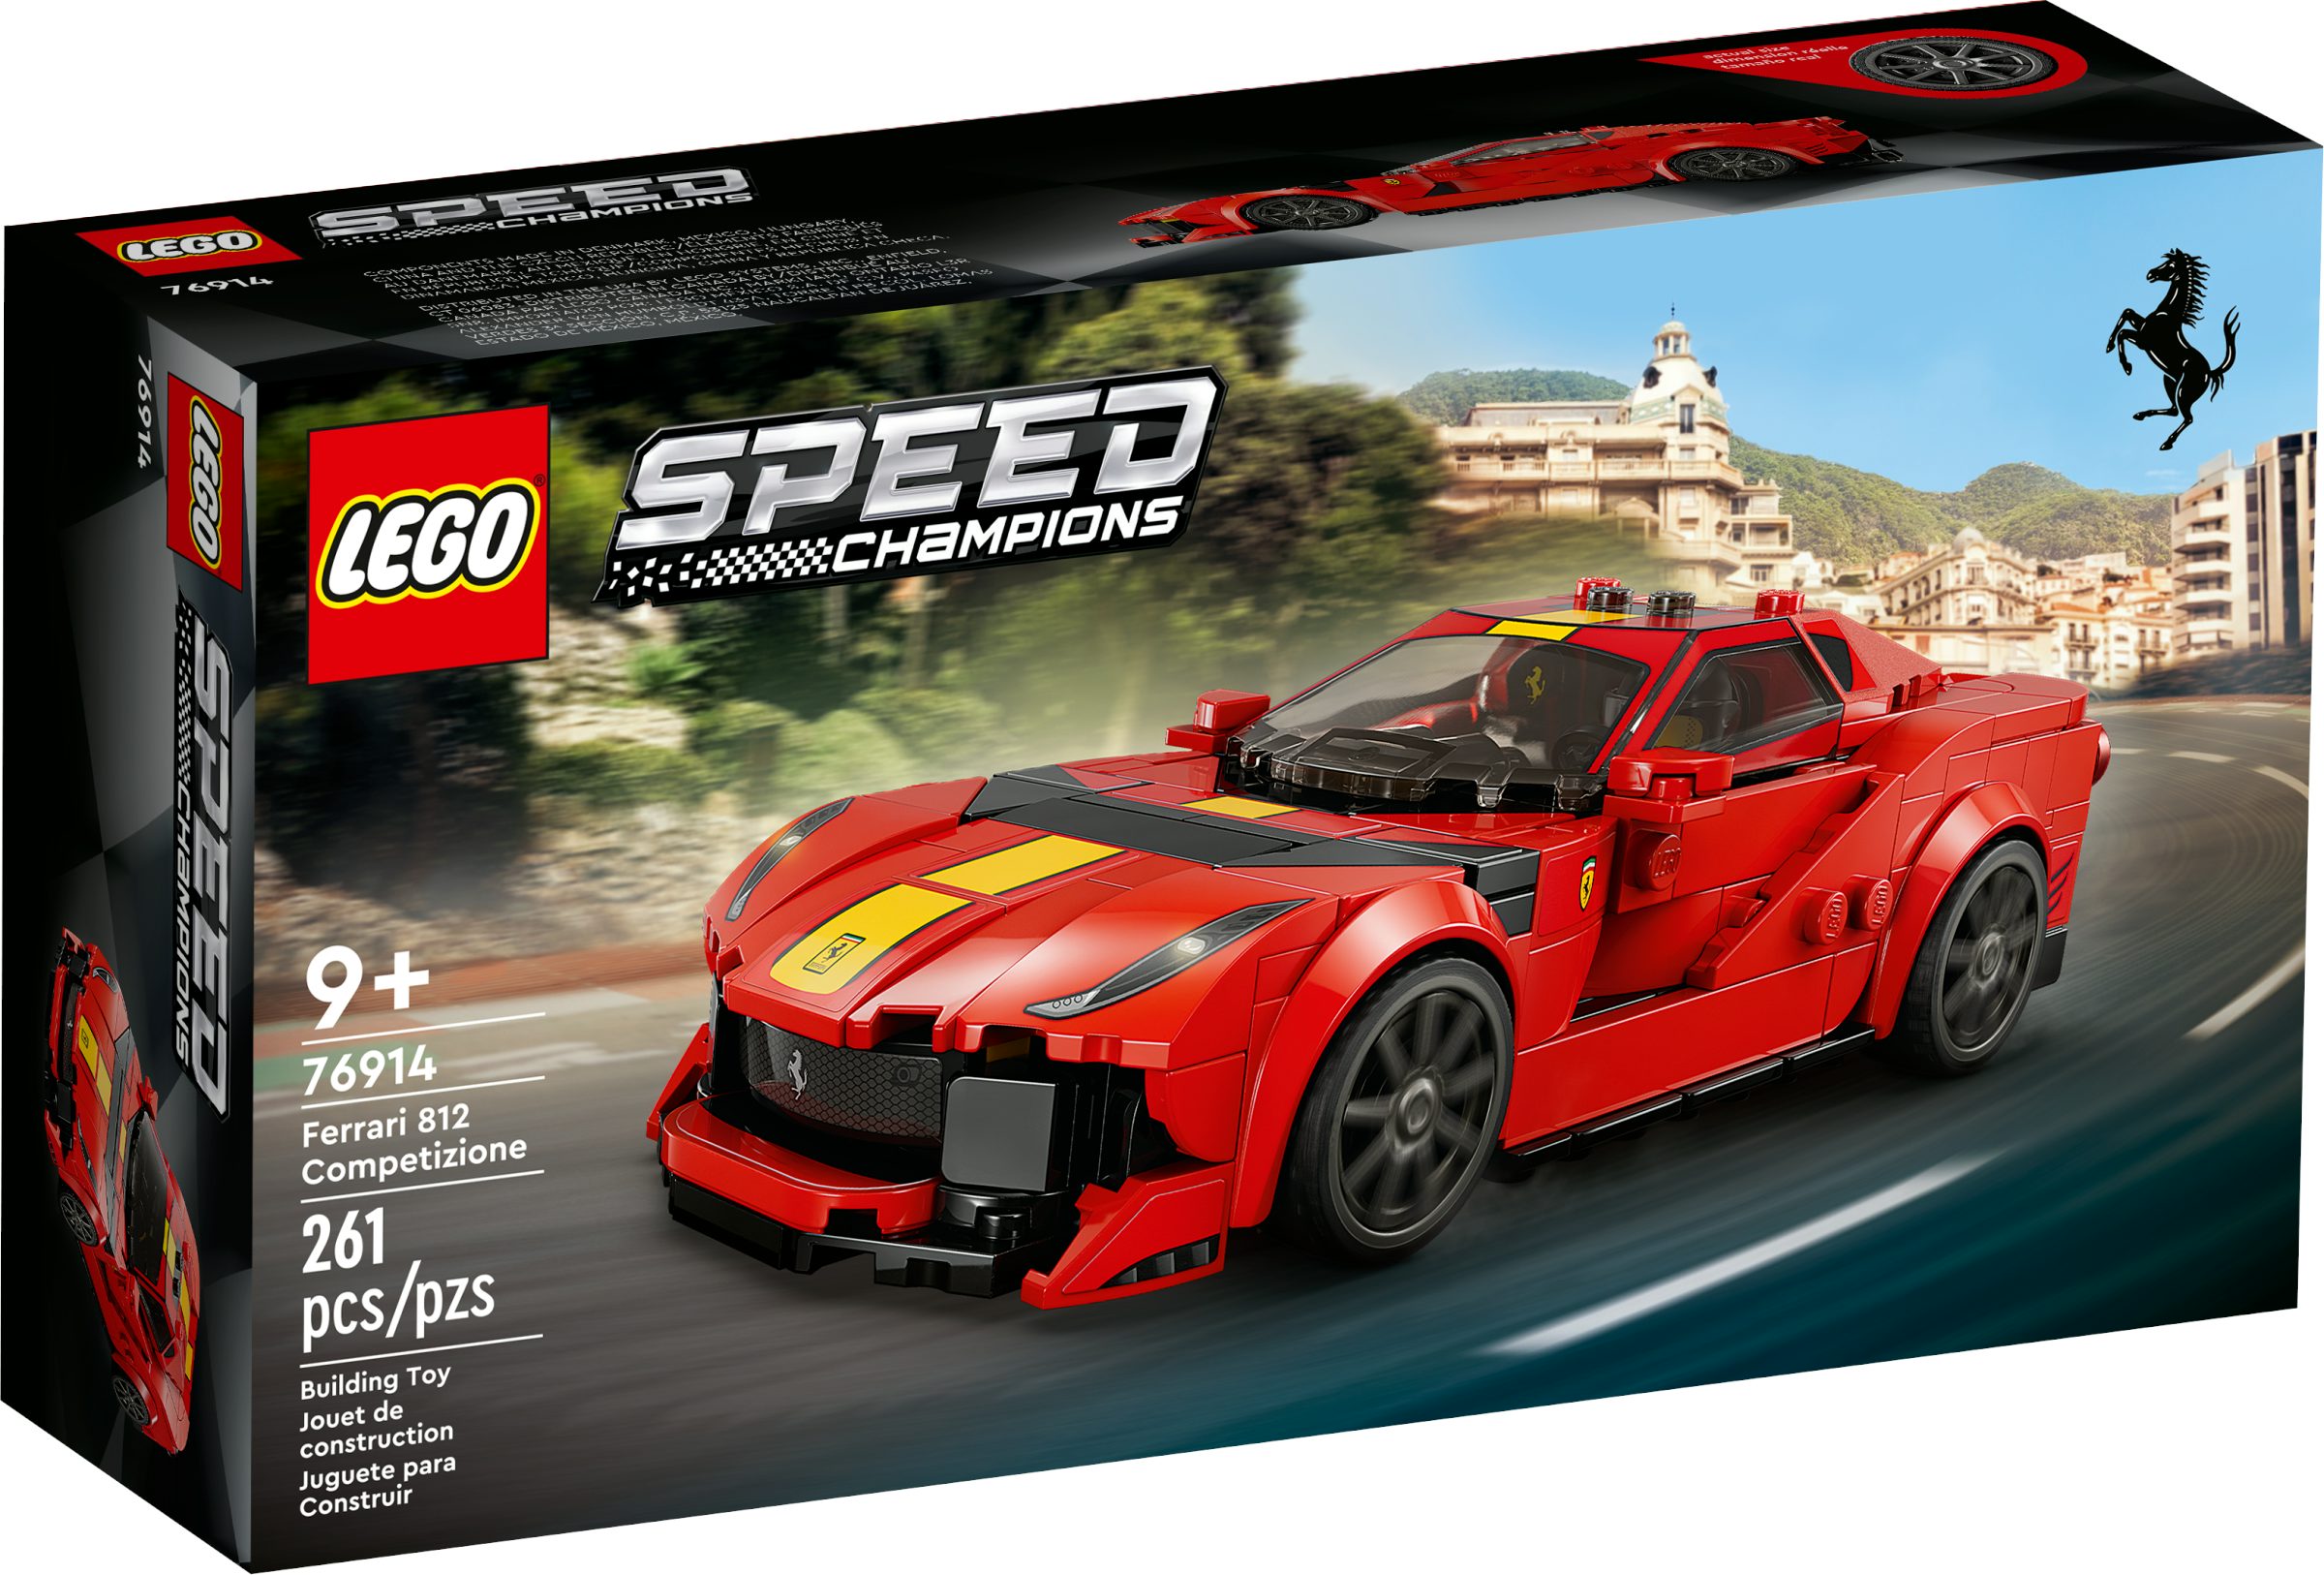 LEGO Speed Champions Ferrari 812 Competizione Set 76914 - US